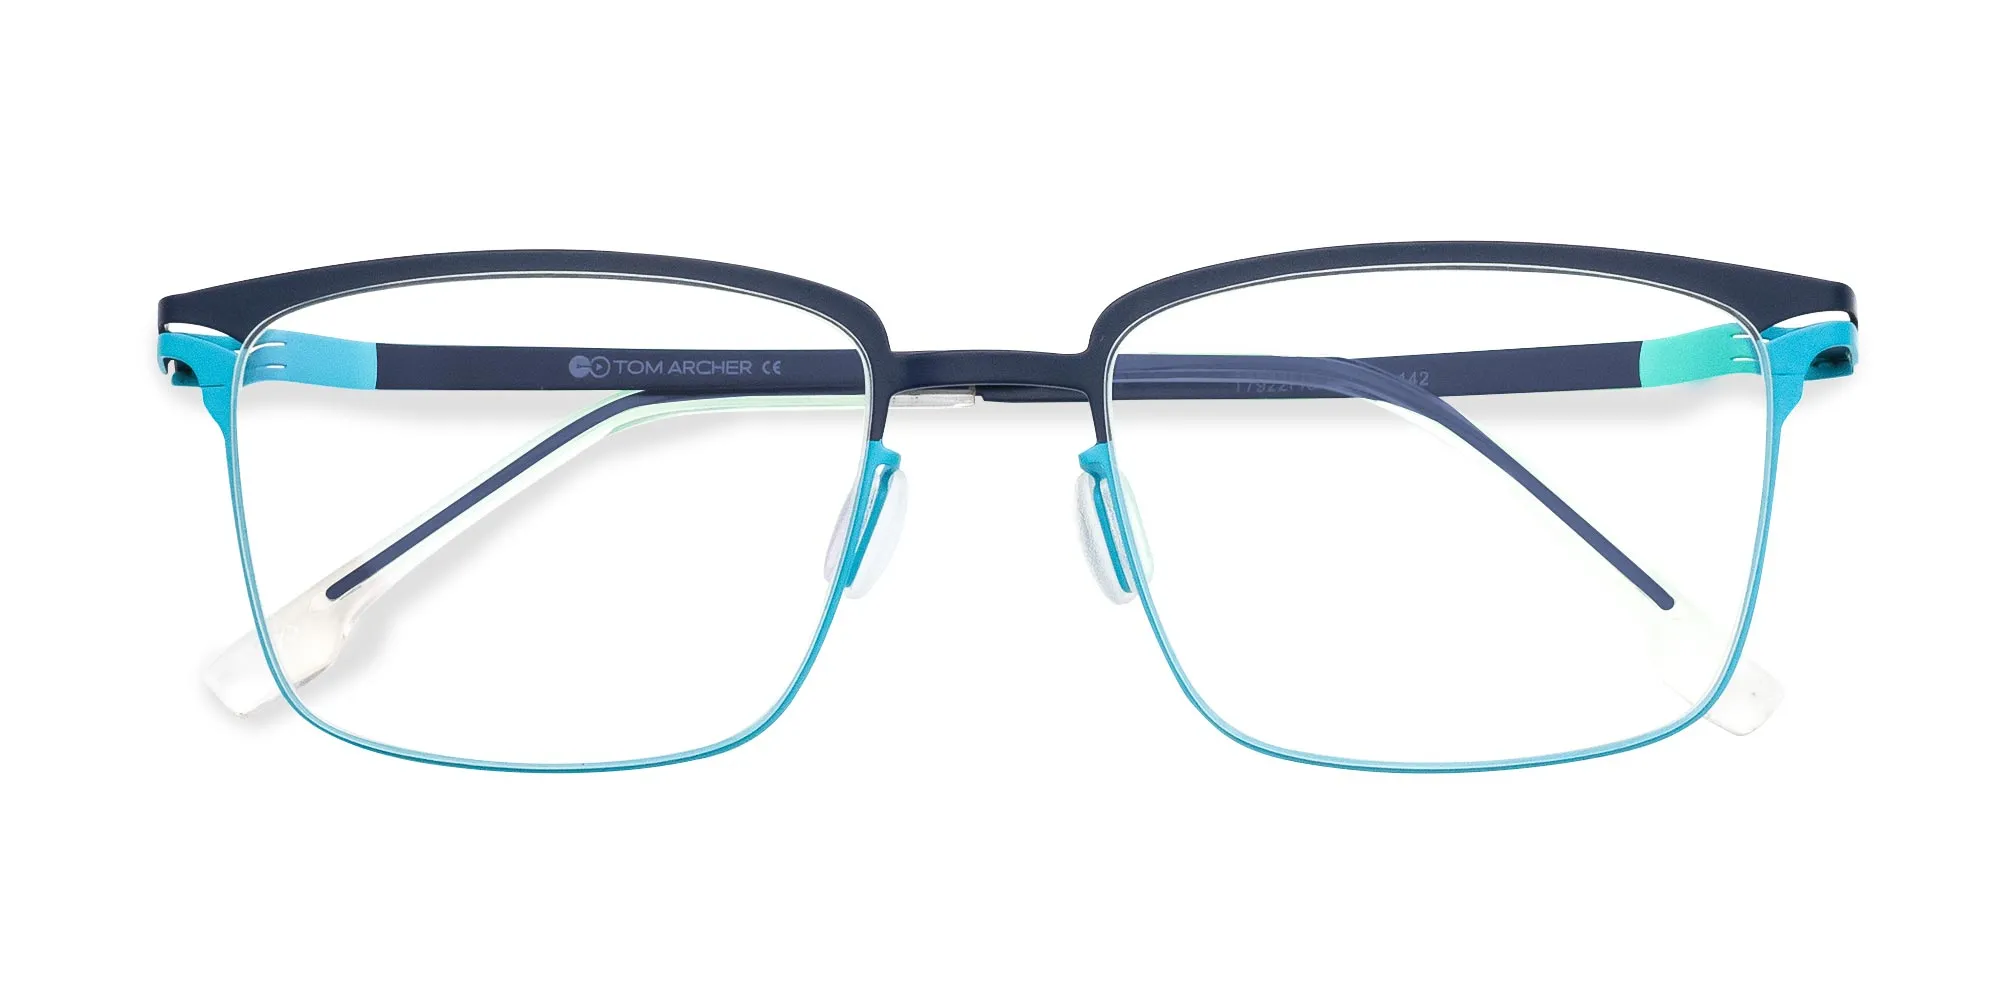 Metallic Aque and Metallic Navy Blue Frame Glasses-2